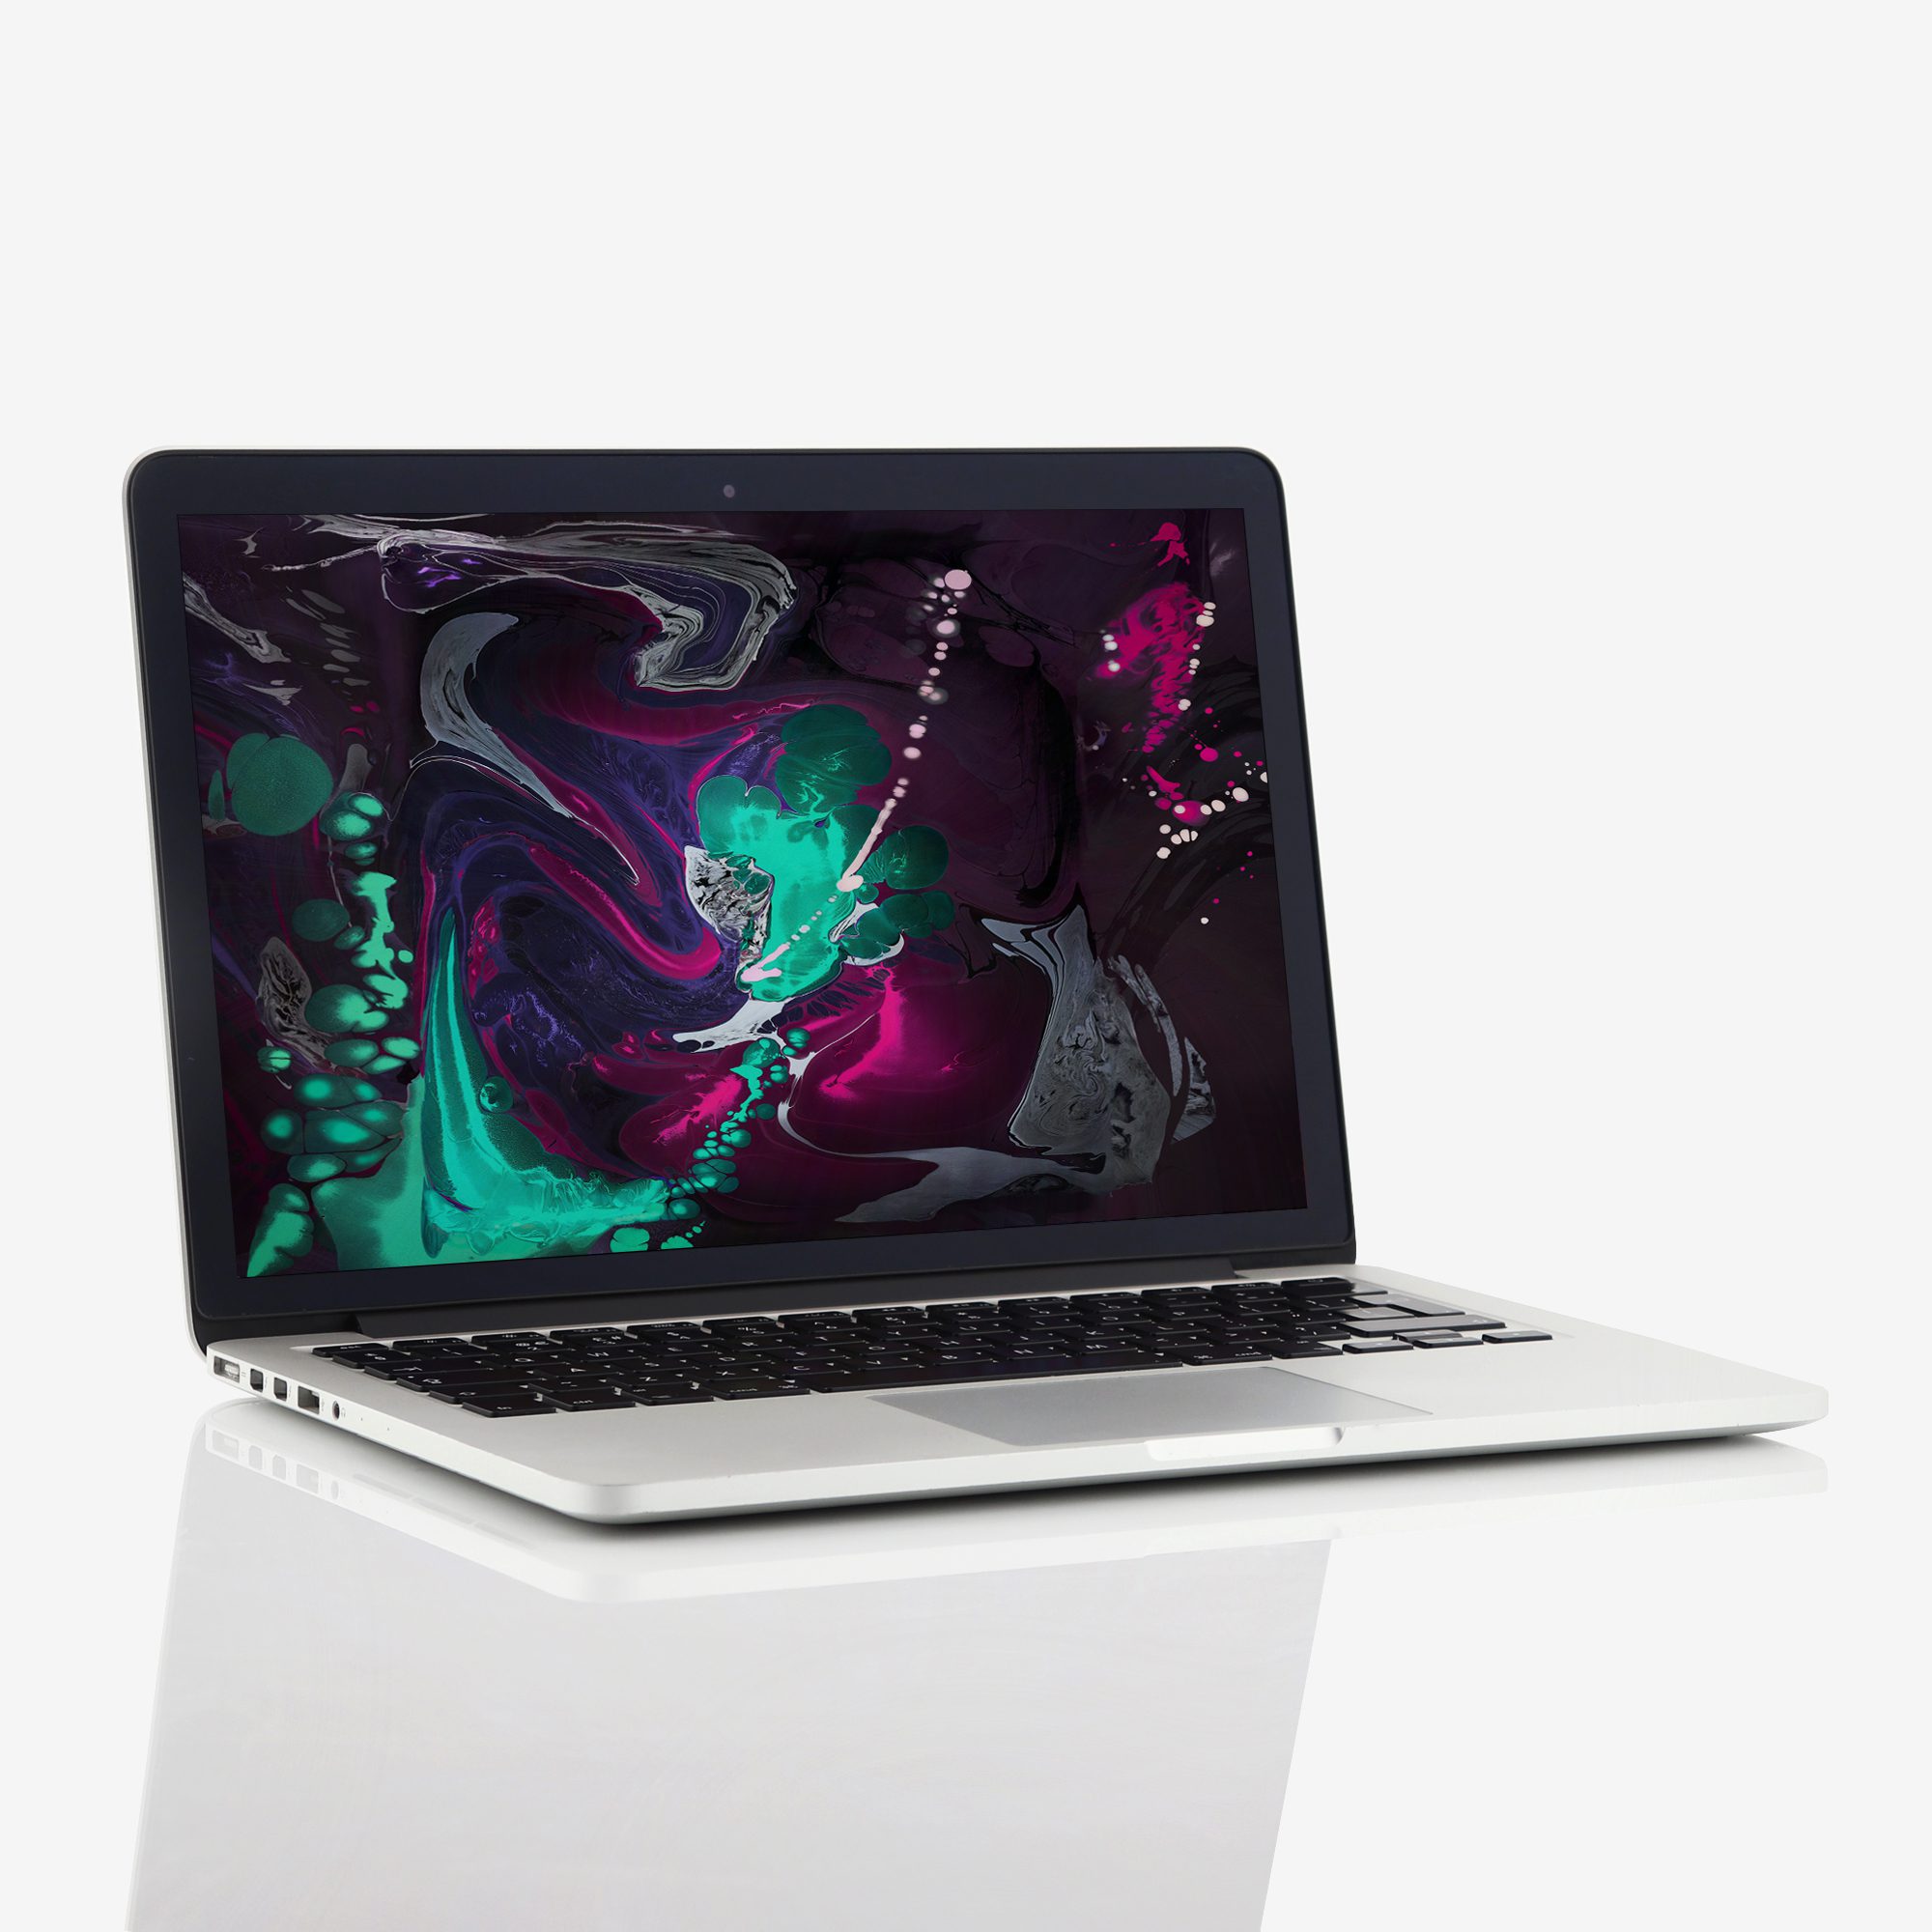 1 x Apple MacBook Pro Retina 13 Inch Intel Core i5 2.70 GHz (2015)